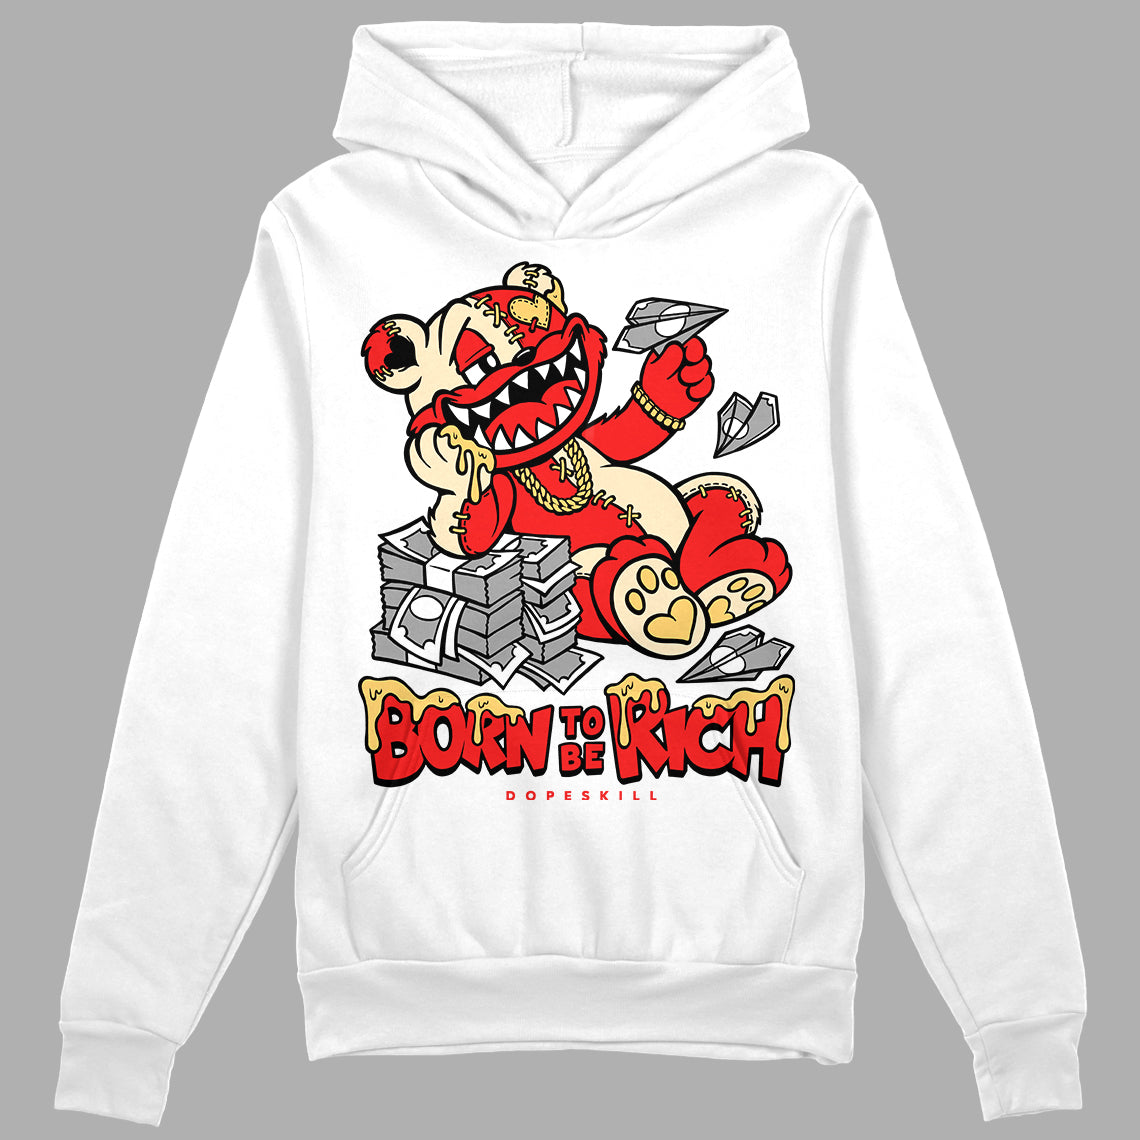 Jordan 5 "Dunk On Mars" DopeSkill Hoodie Sweatshirt Born To Be Rich Graphic Streetwear - White